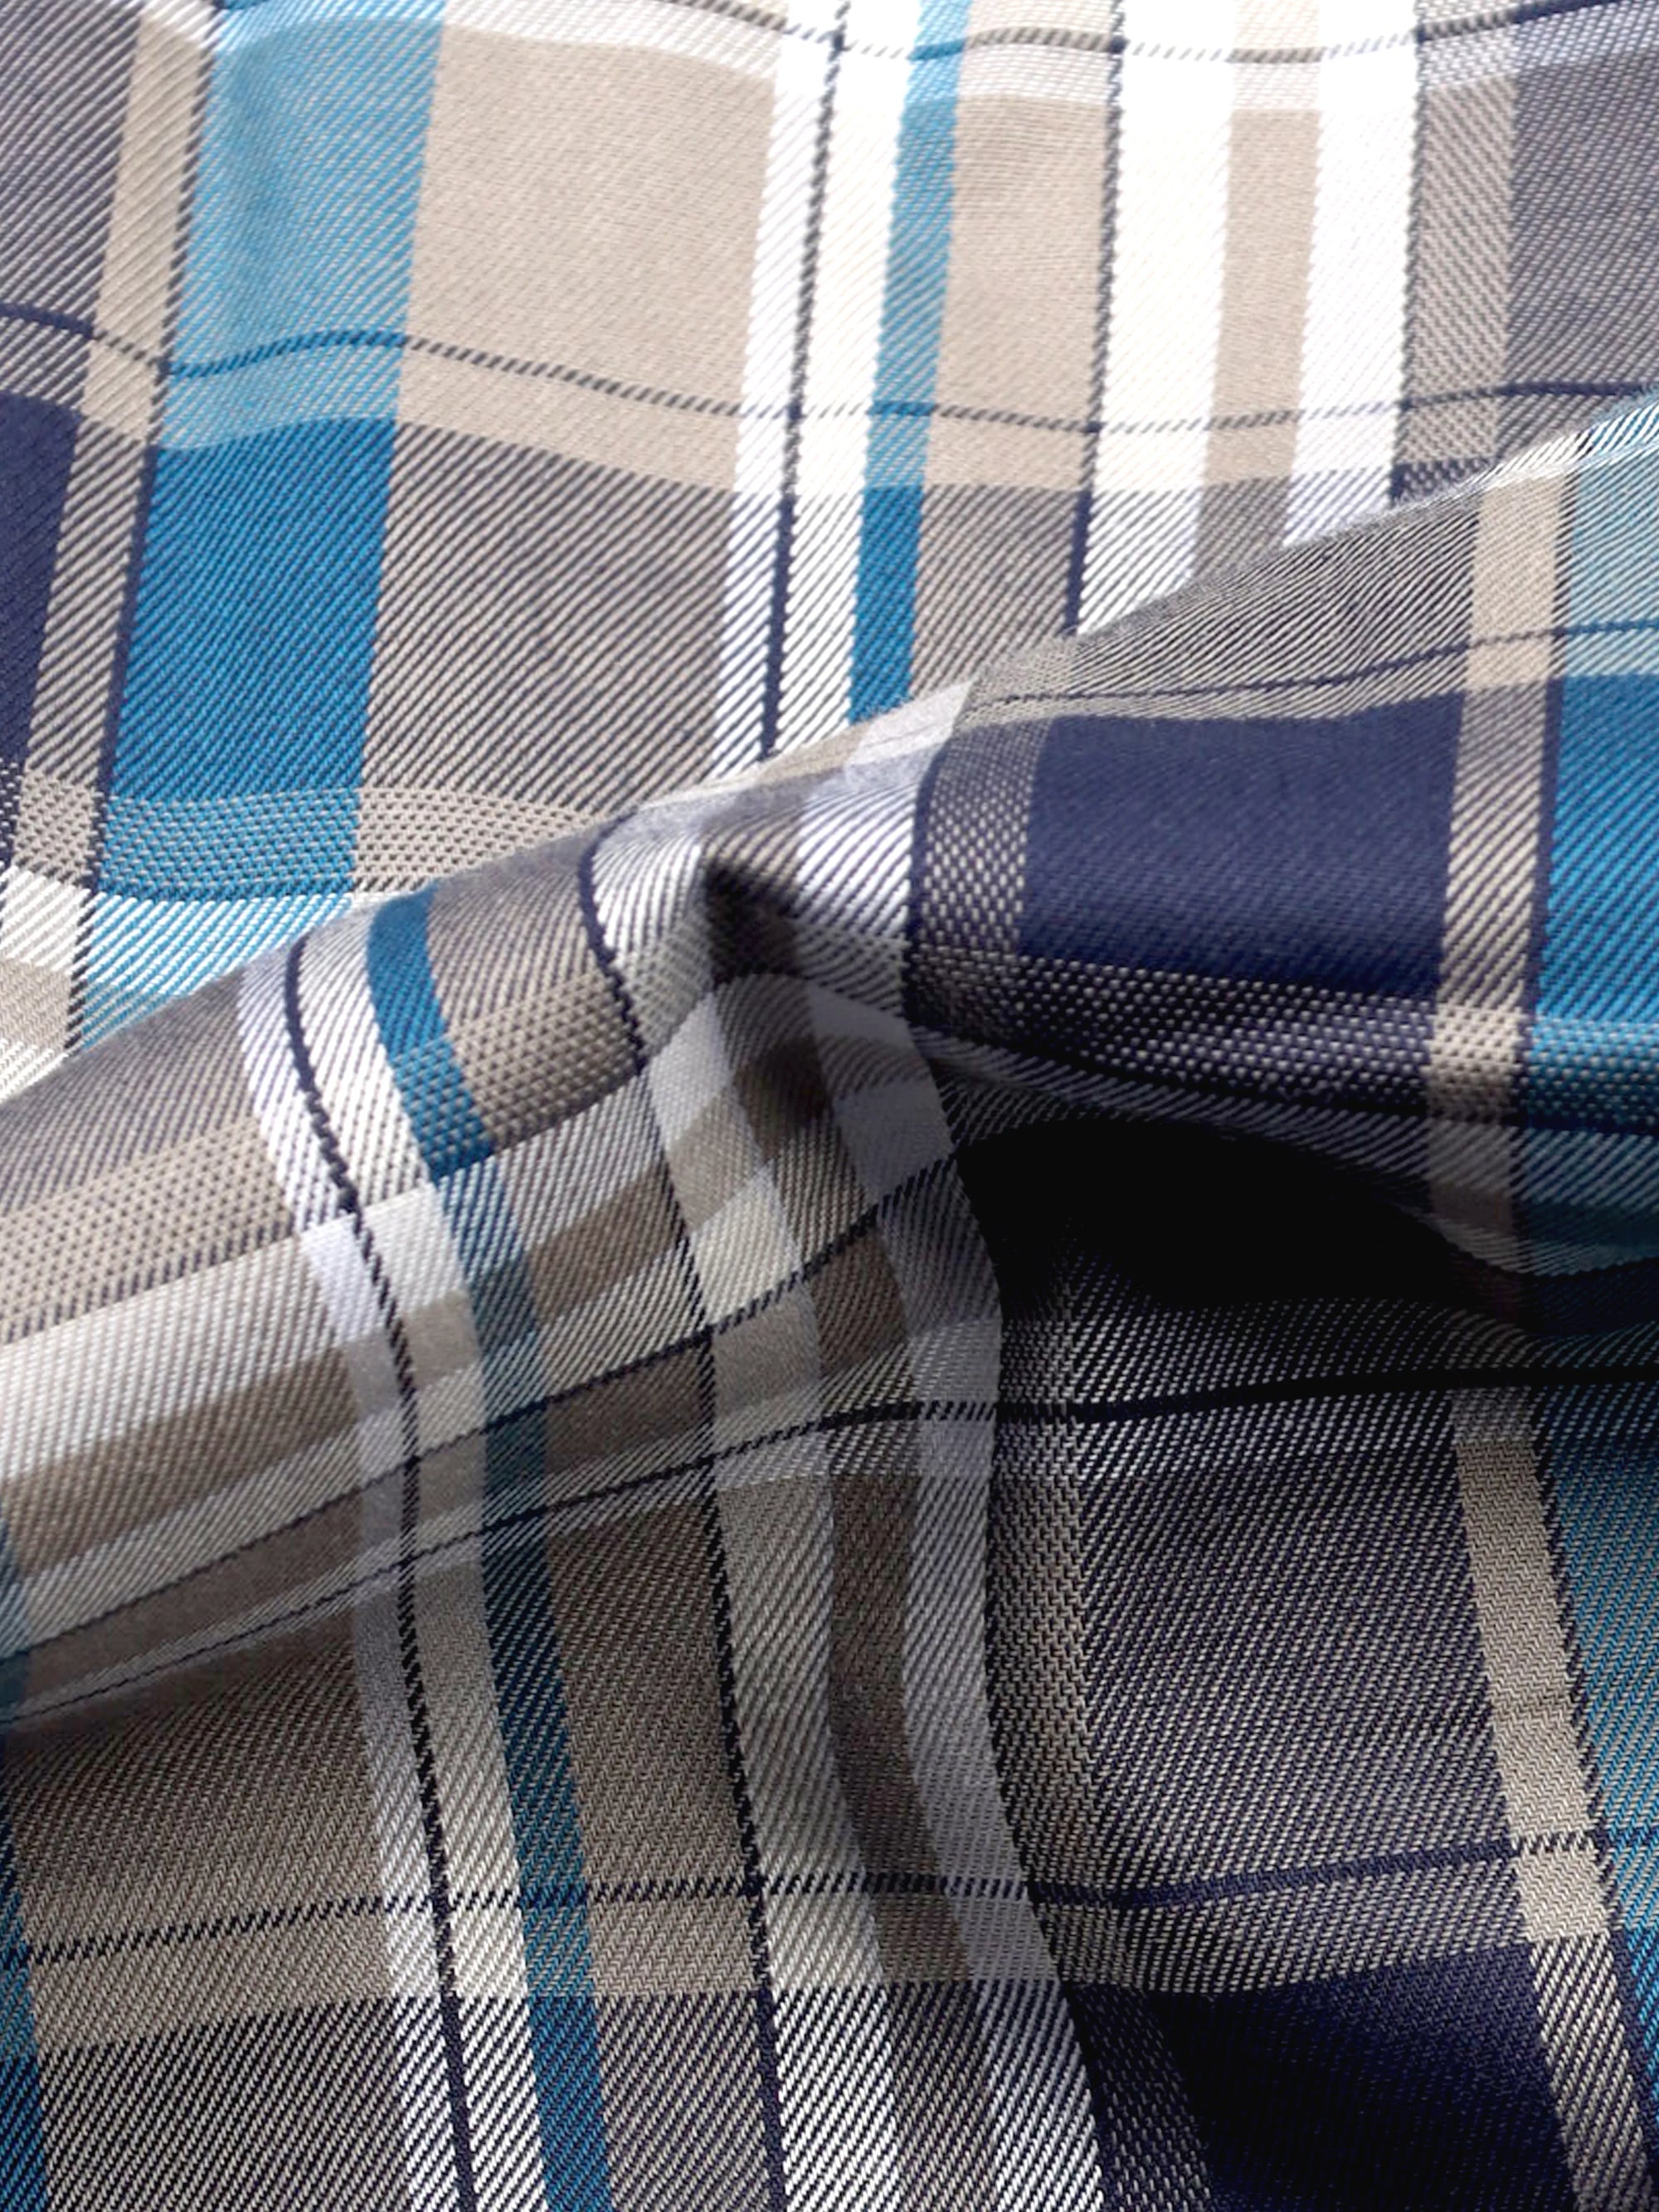 Grey Goose With Blue Shades Tartan Plaid Premium Cotton Shirt